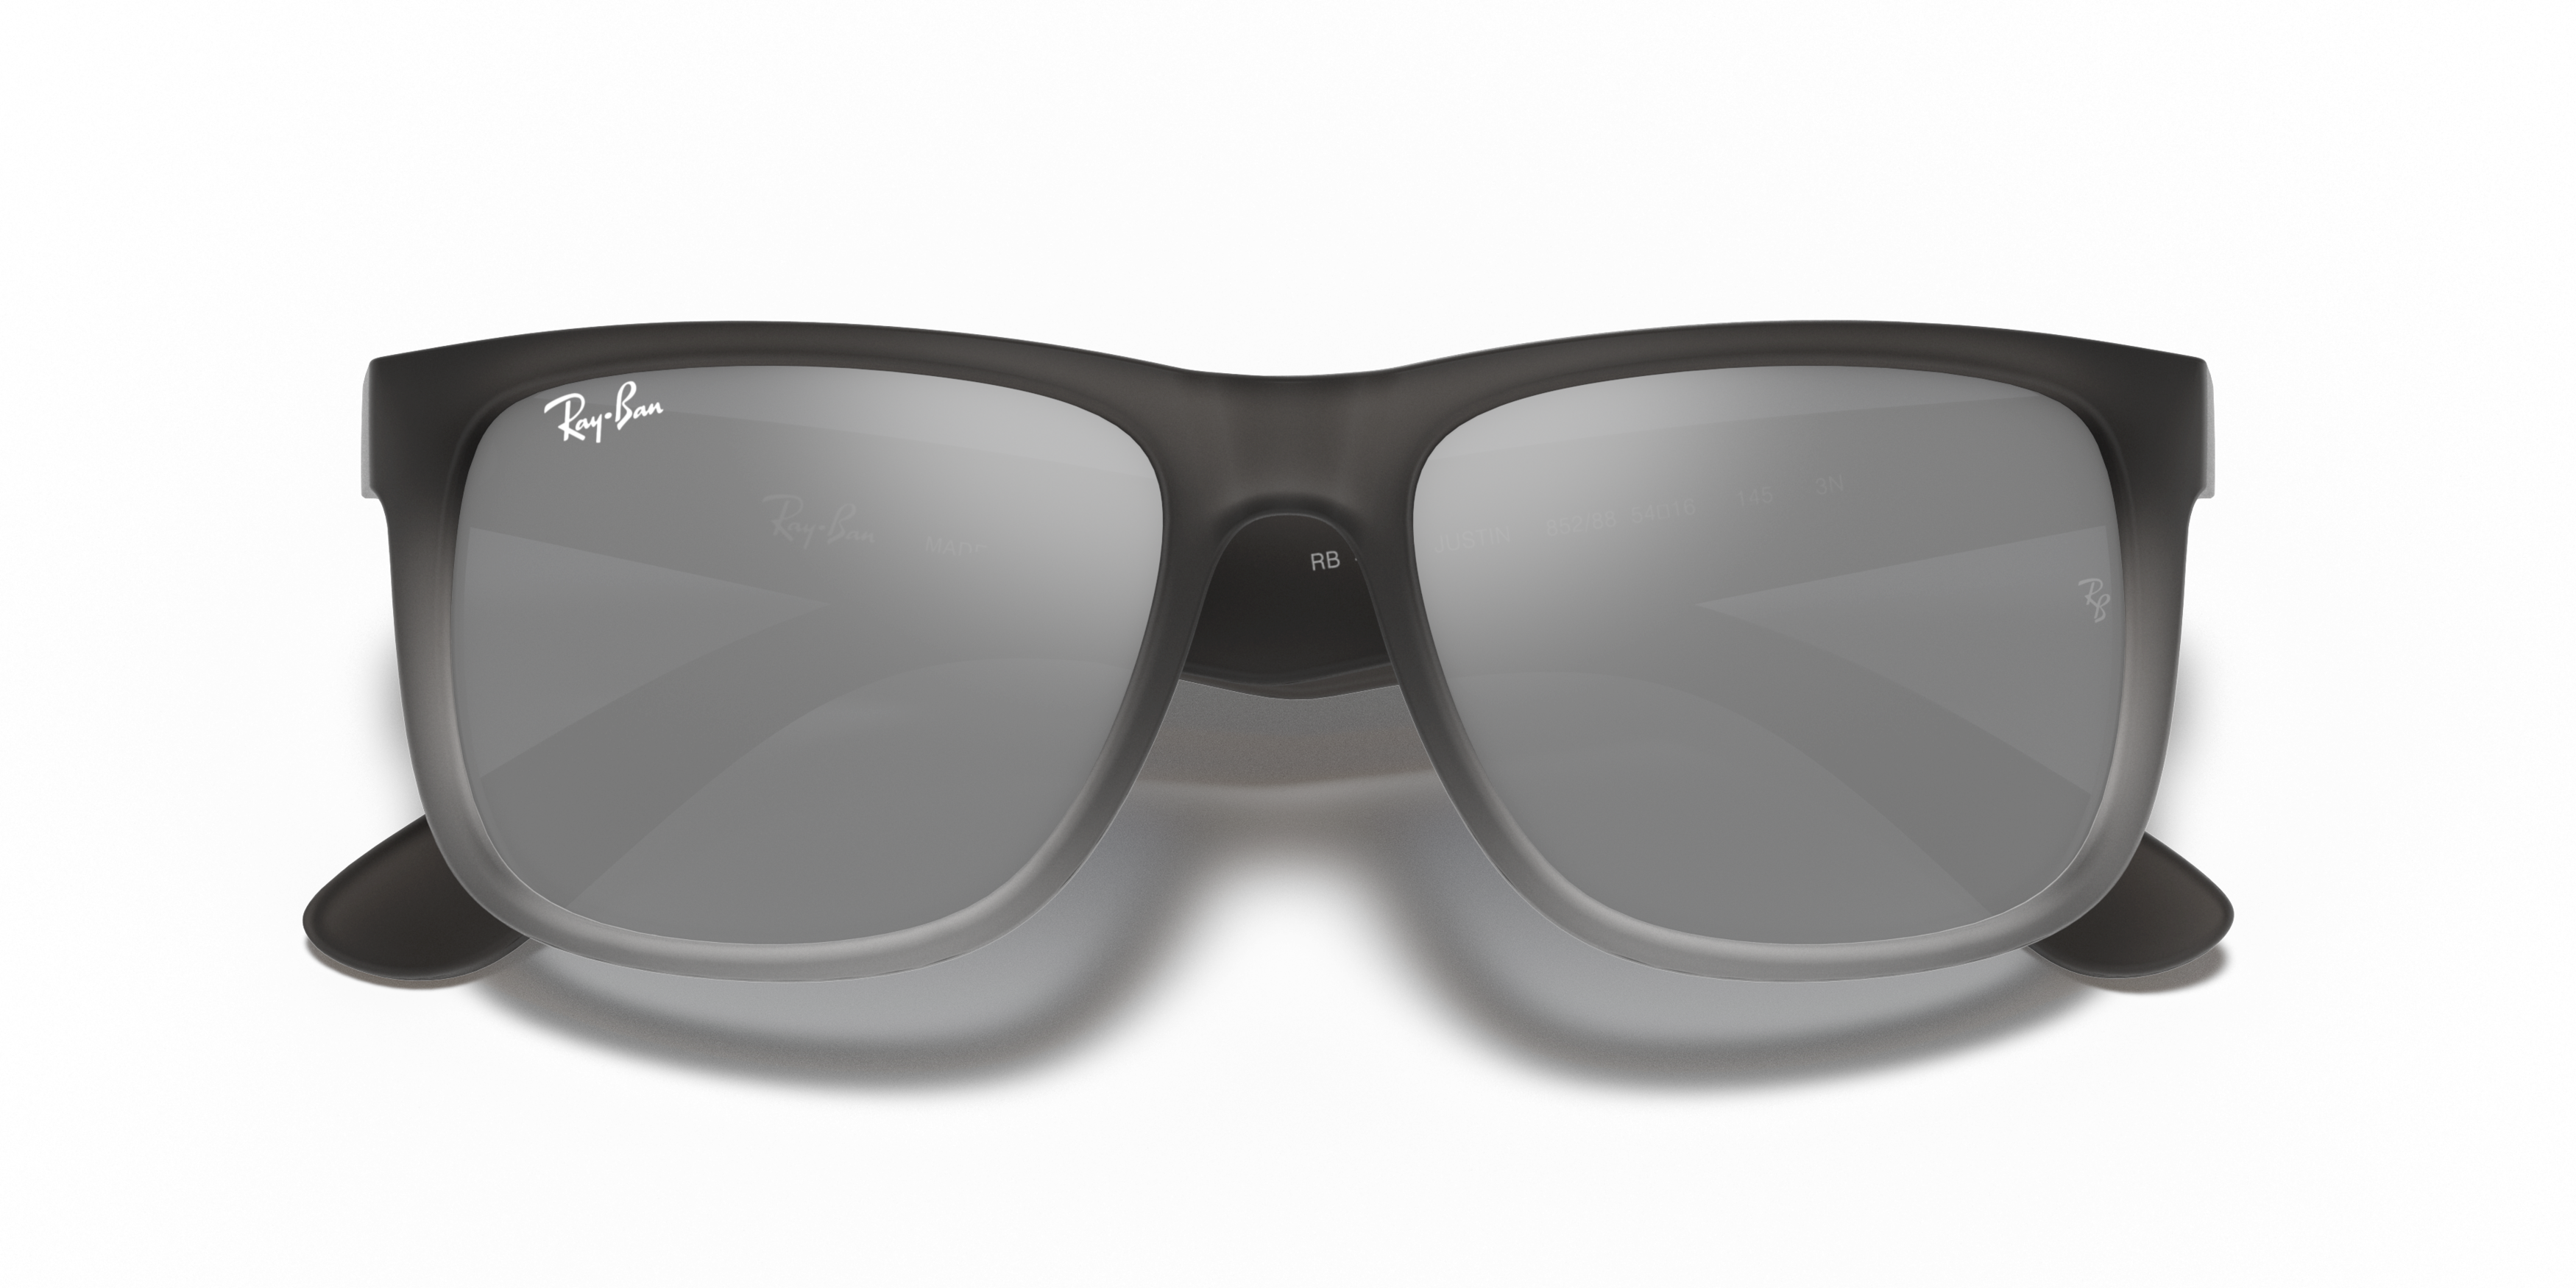 Folded Ray-Ban RB 4165 Sunglasses Grey / Grey